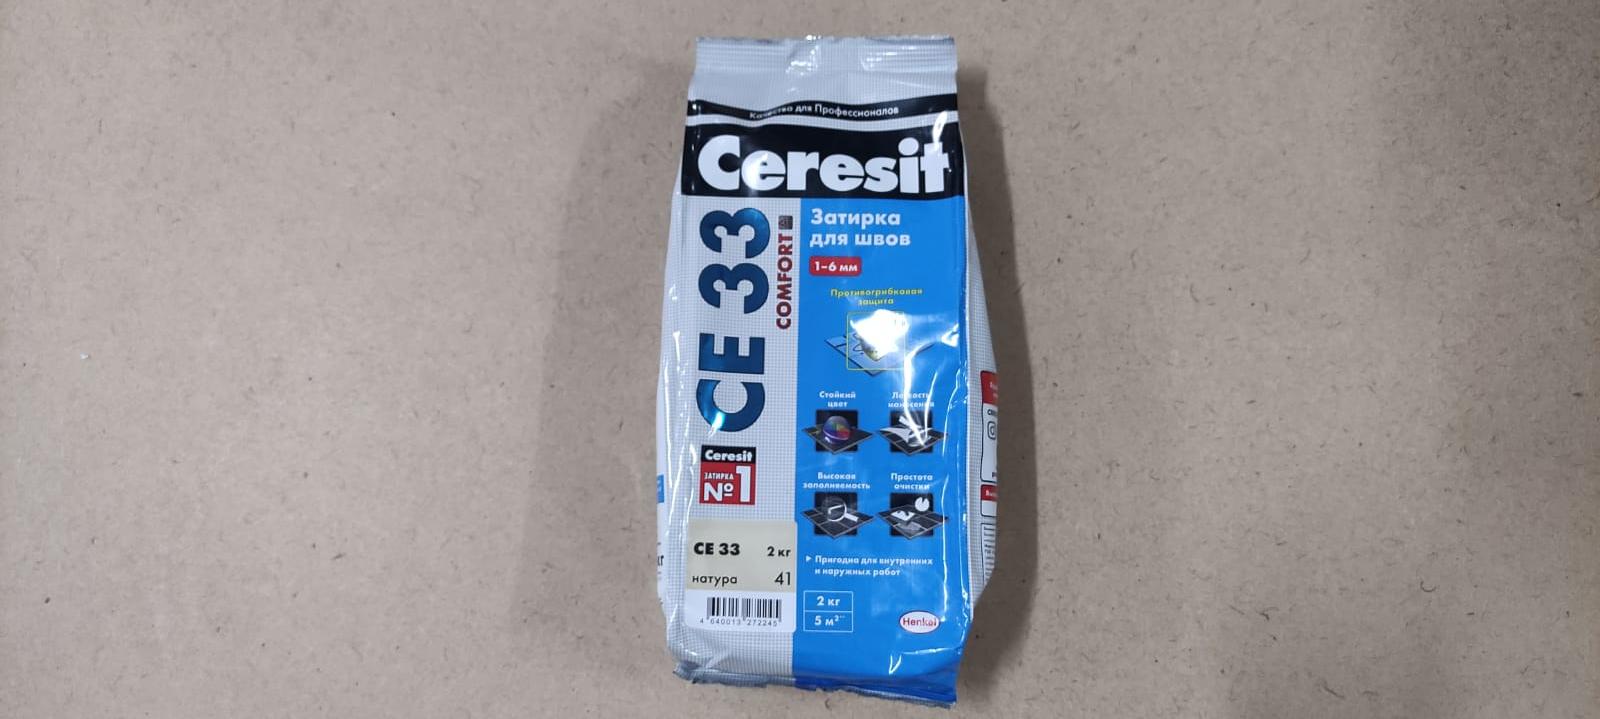 Затирка для швов 1-6 мм Ceresit СЕ 33 Comfort 2 кг (цвет: Натура)